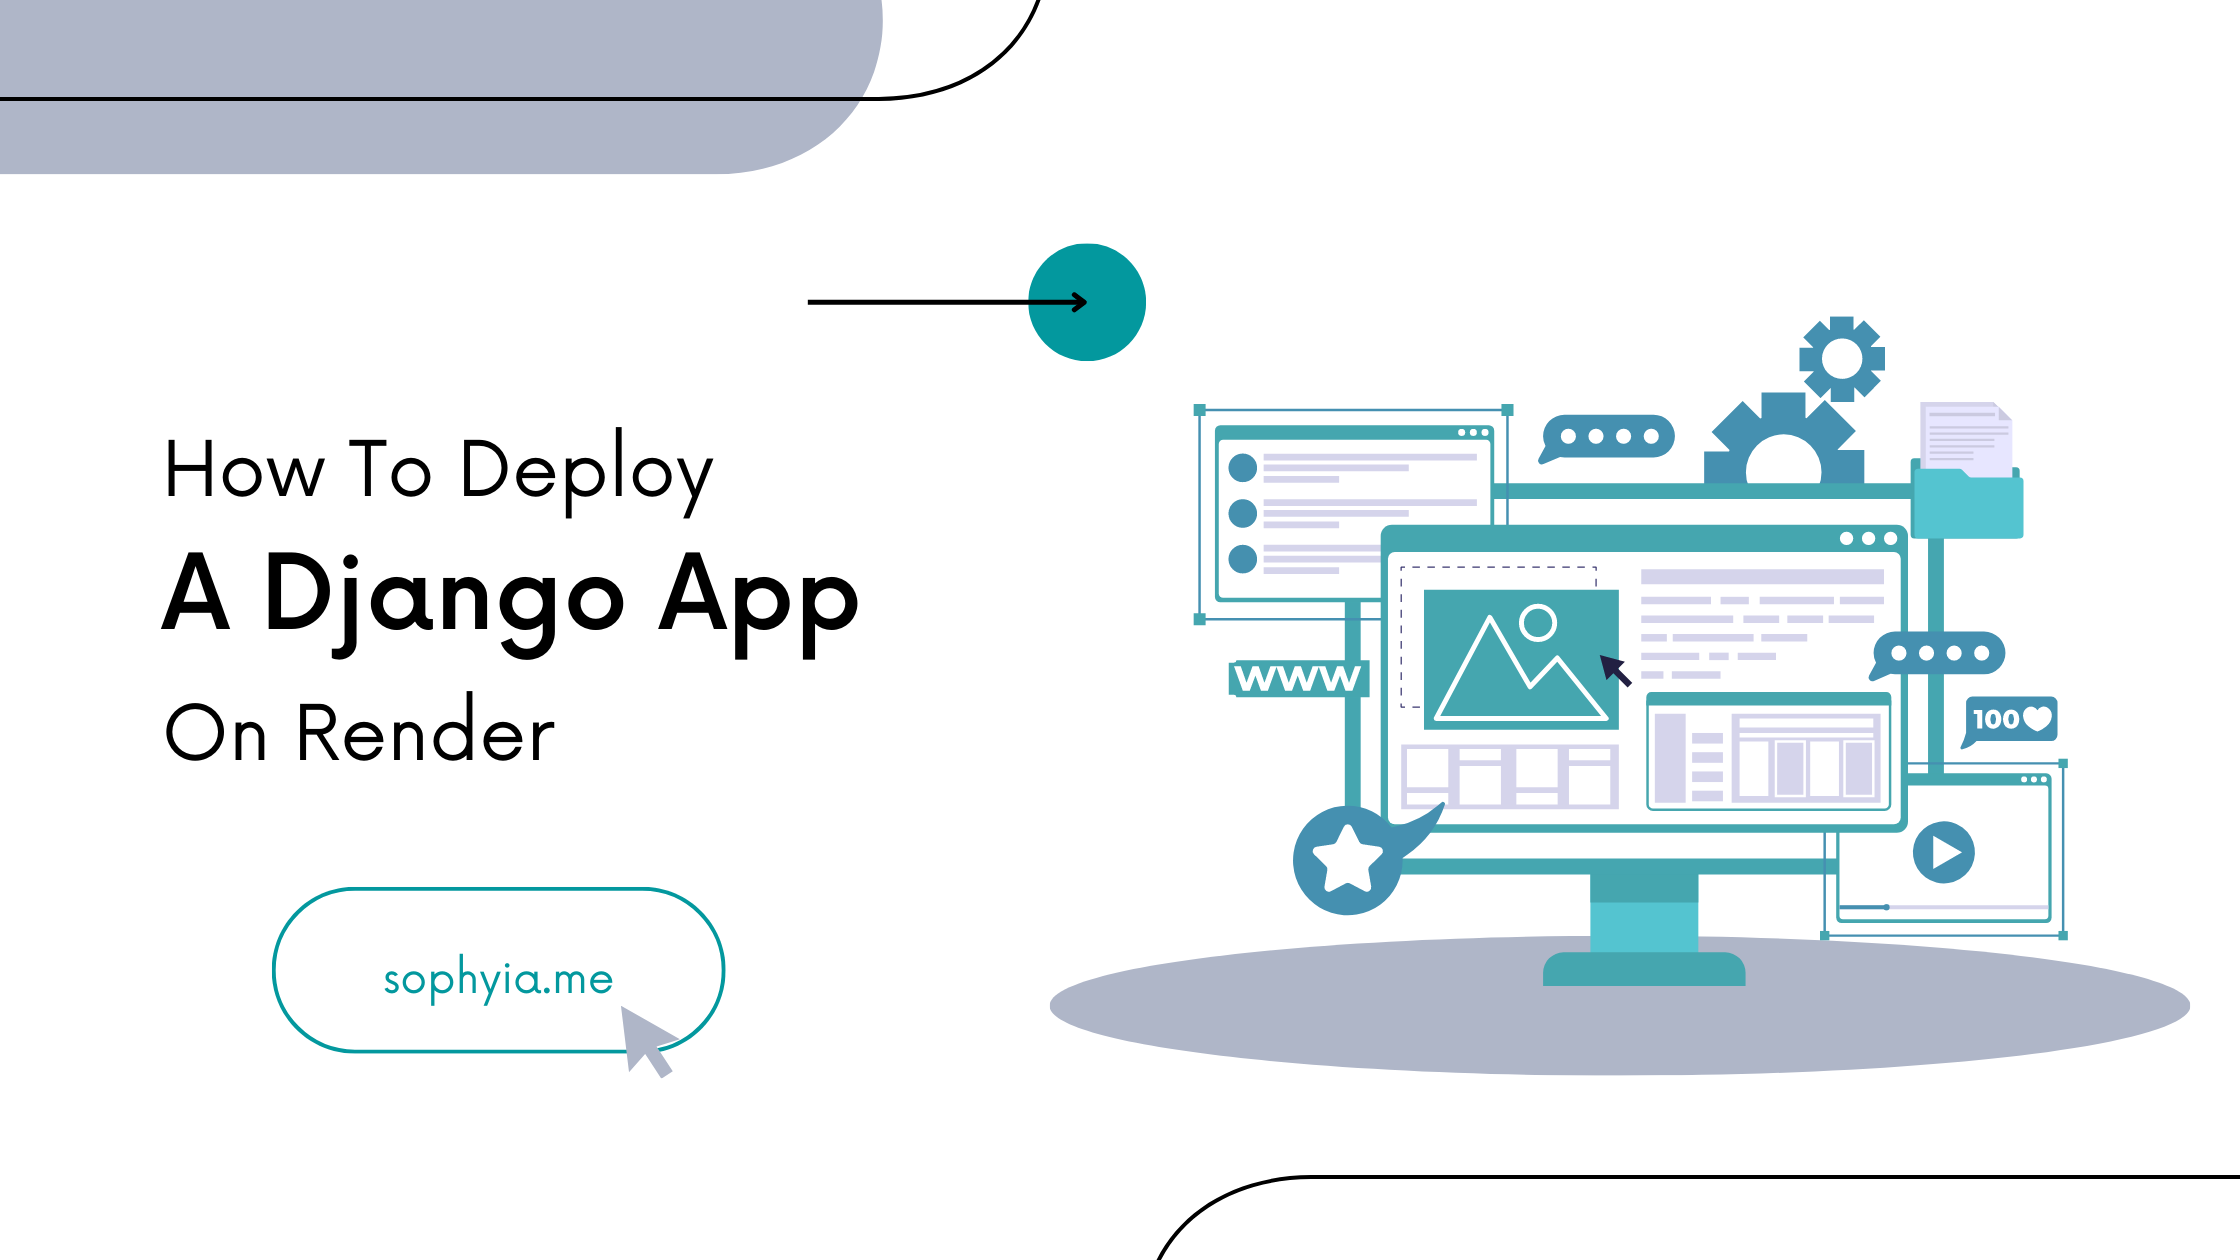 How to Deploy a Django App on Render